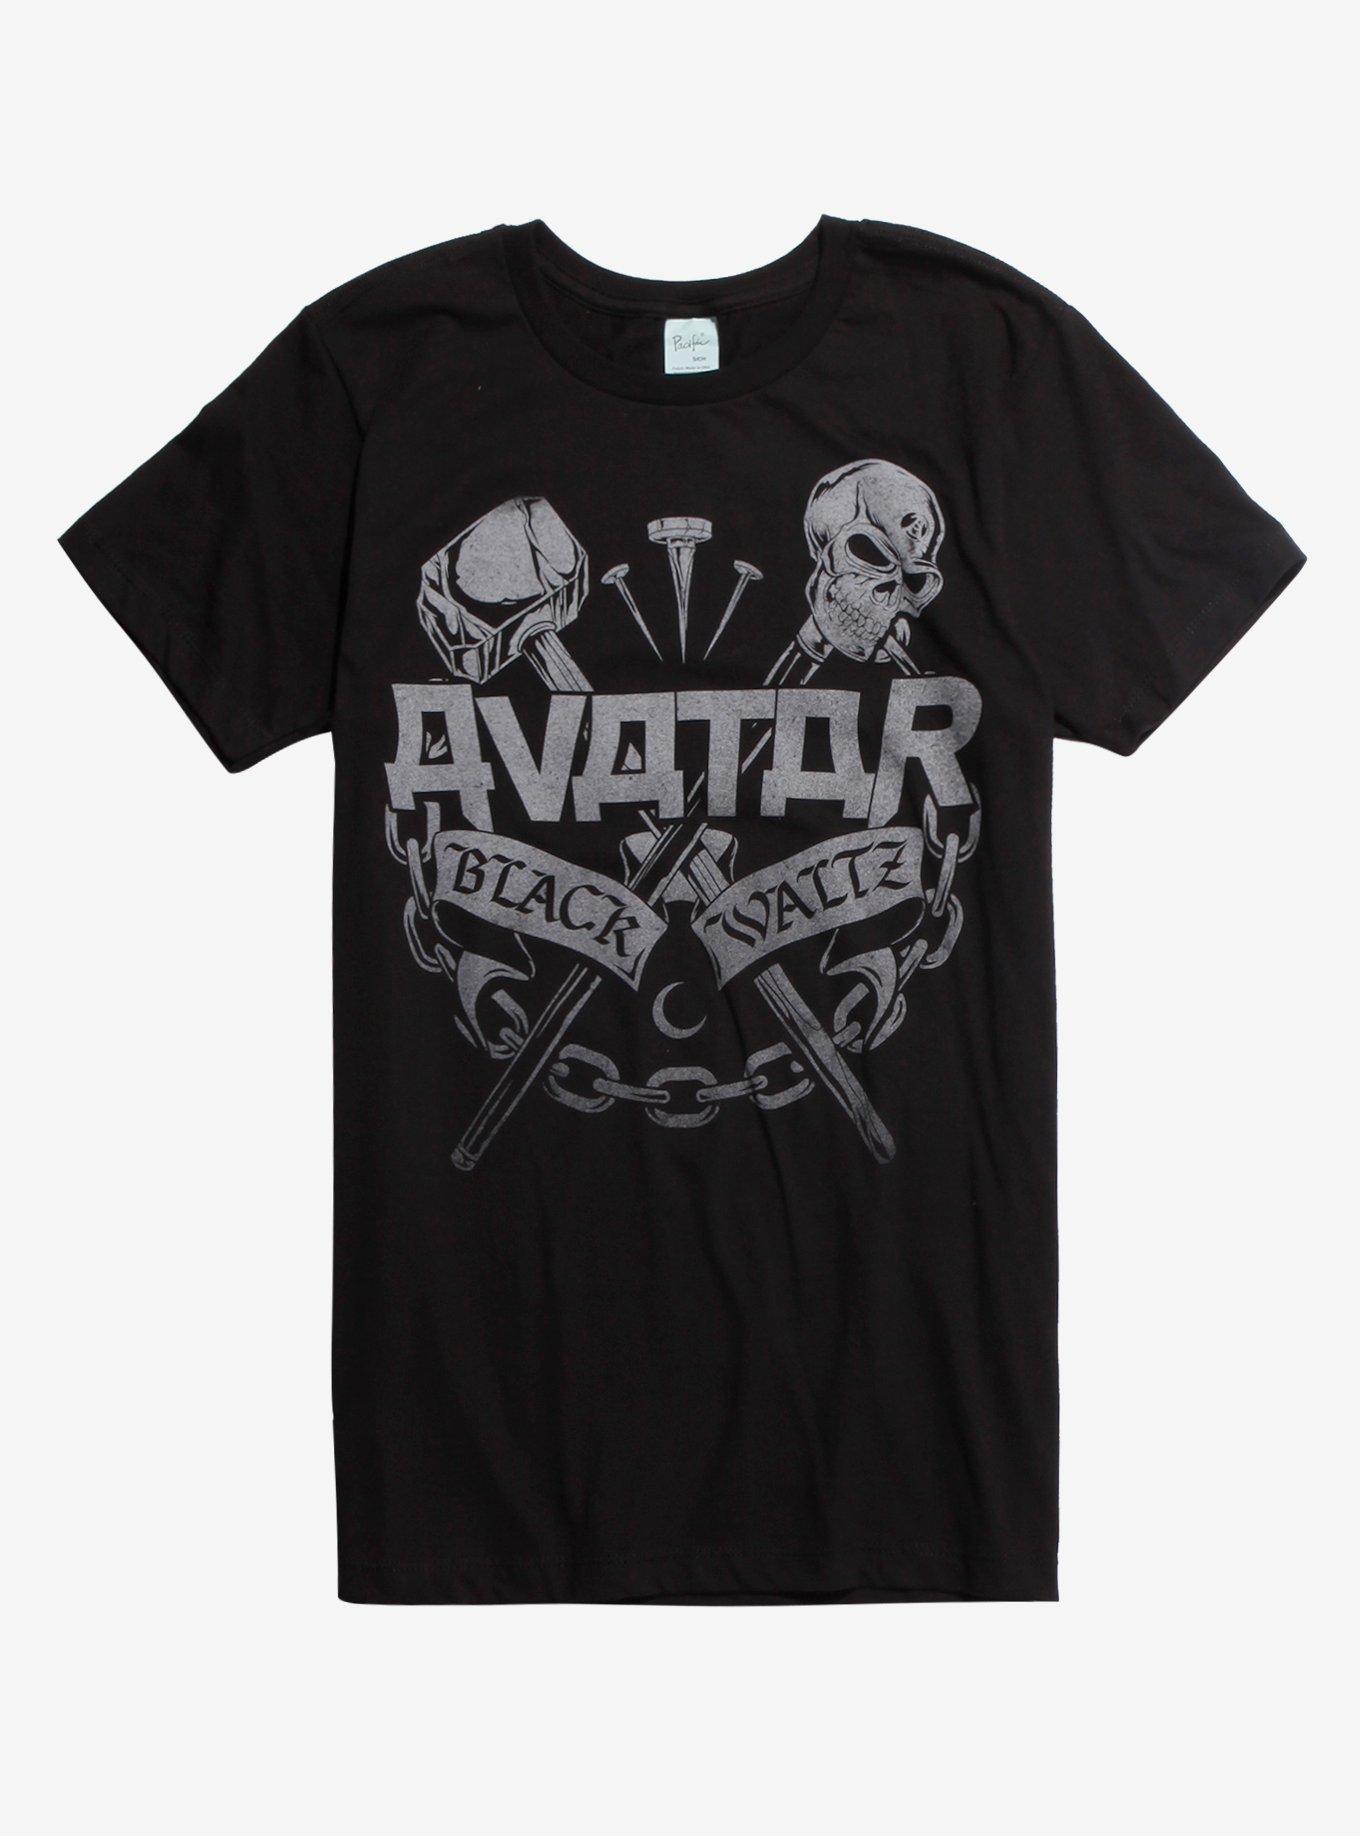 Avatar Black Waltz T-Shirt, BLACK, hi-res